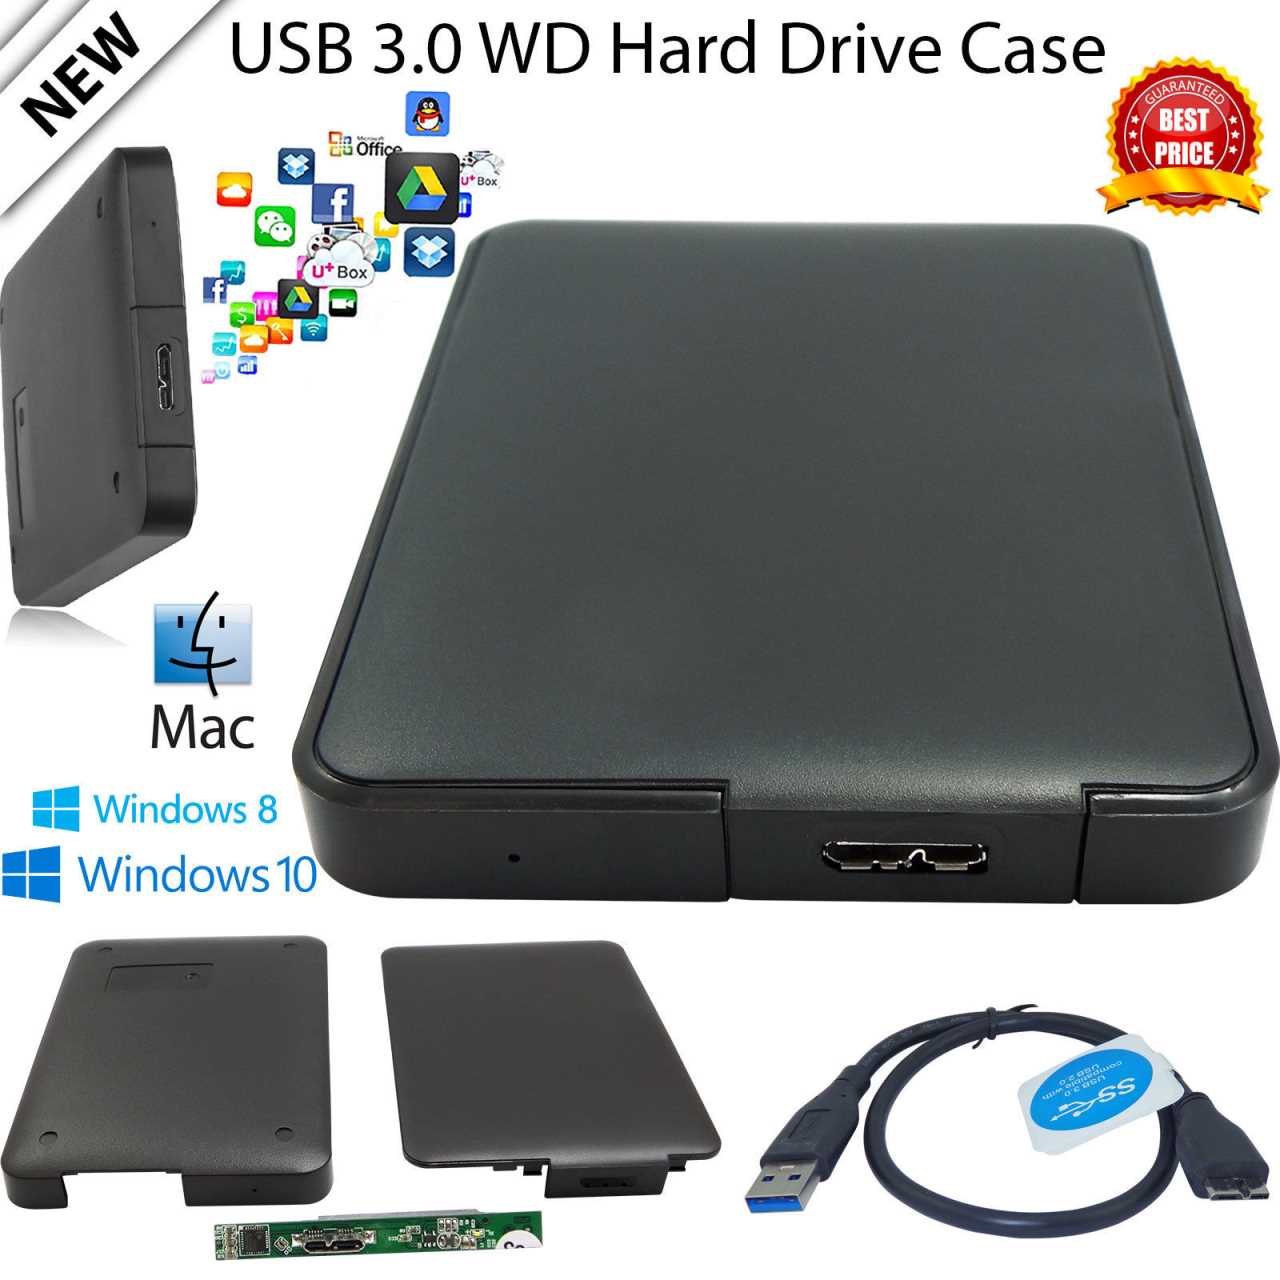 USB 3.0 SATA HDD 2.5 inch External Hard Drive Enclosure Case Caddy Black -  PCMacs